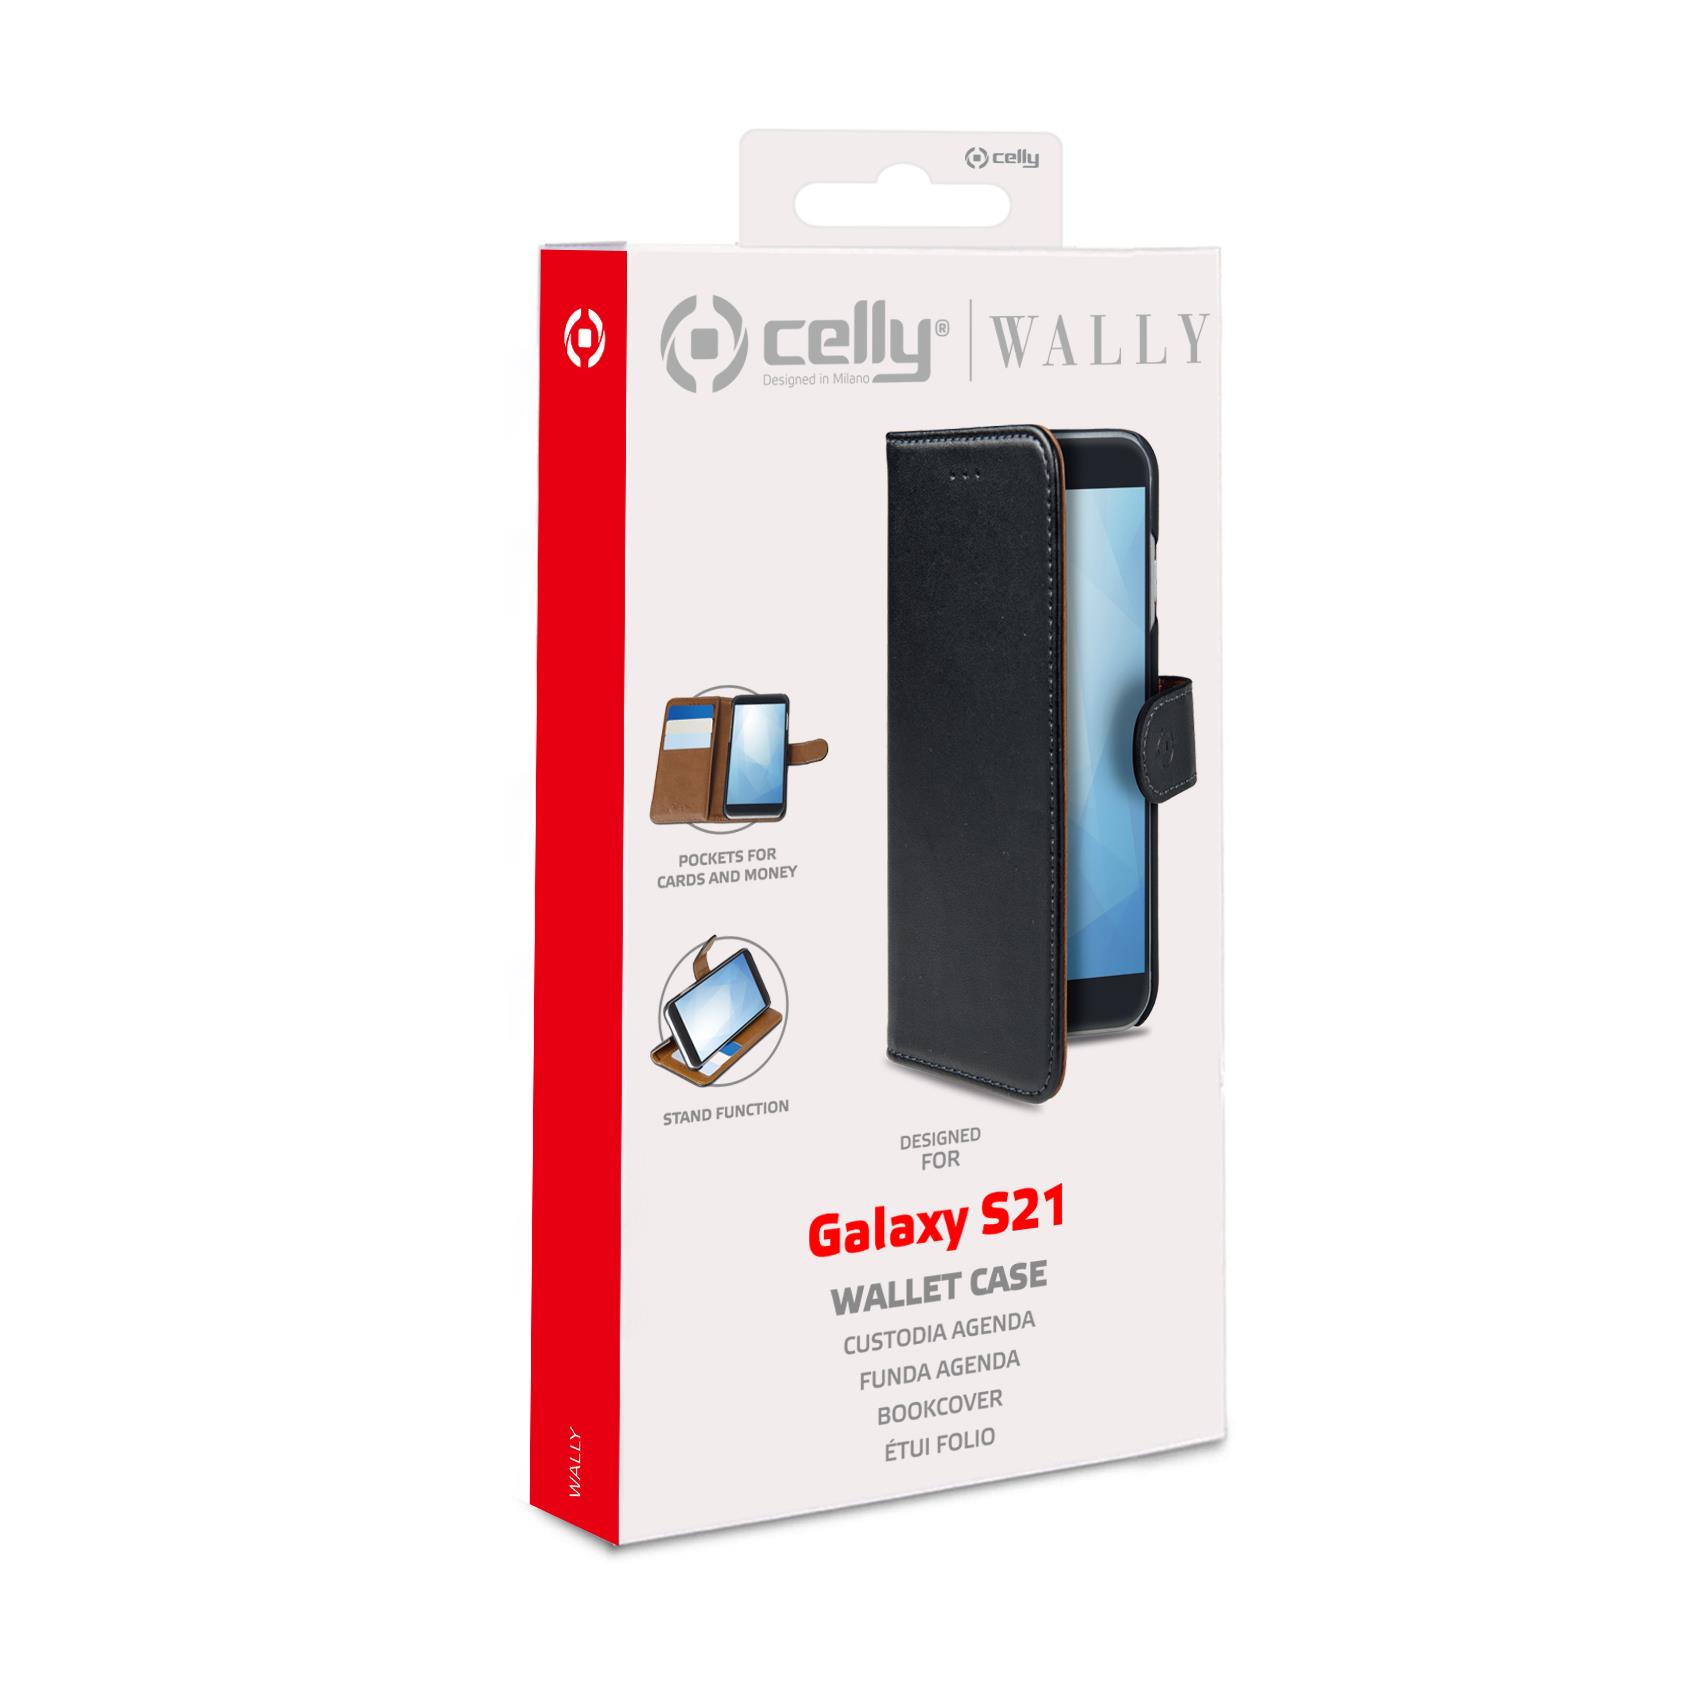 Wally Case Galaxy S21 5g Black Celly Wally993 8021735763840